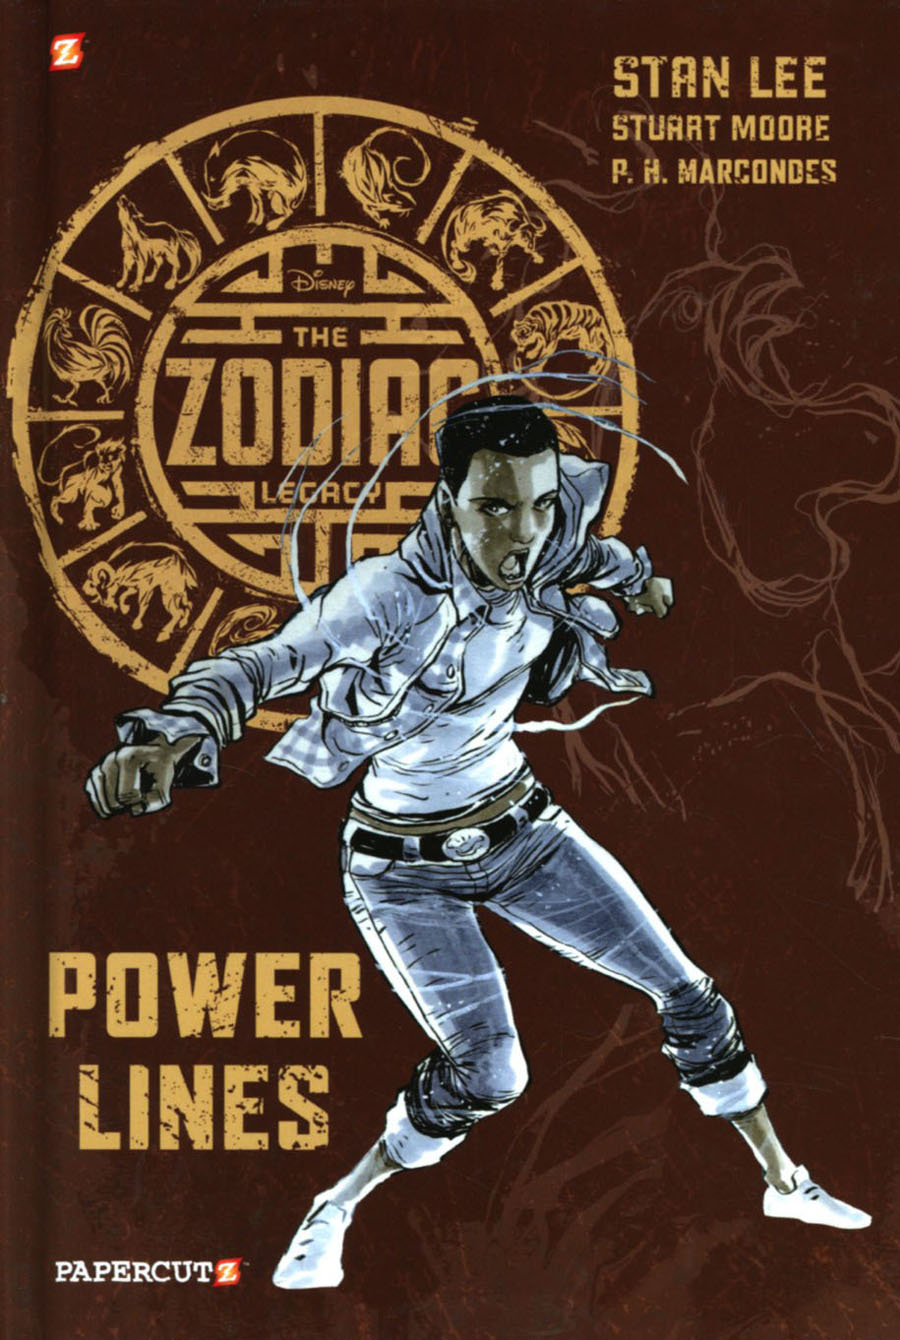 Zodiac Legacy Vol 2 Power Lines HC